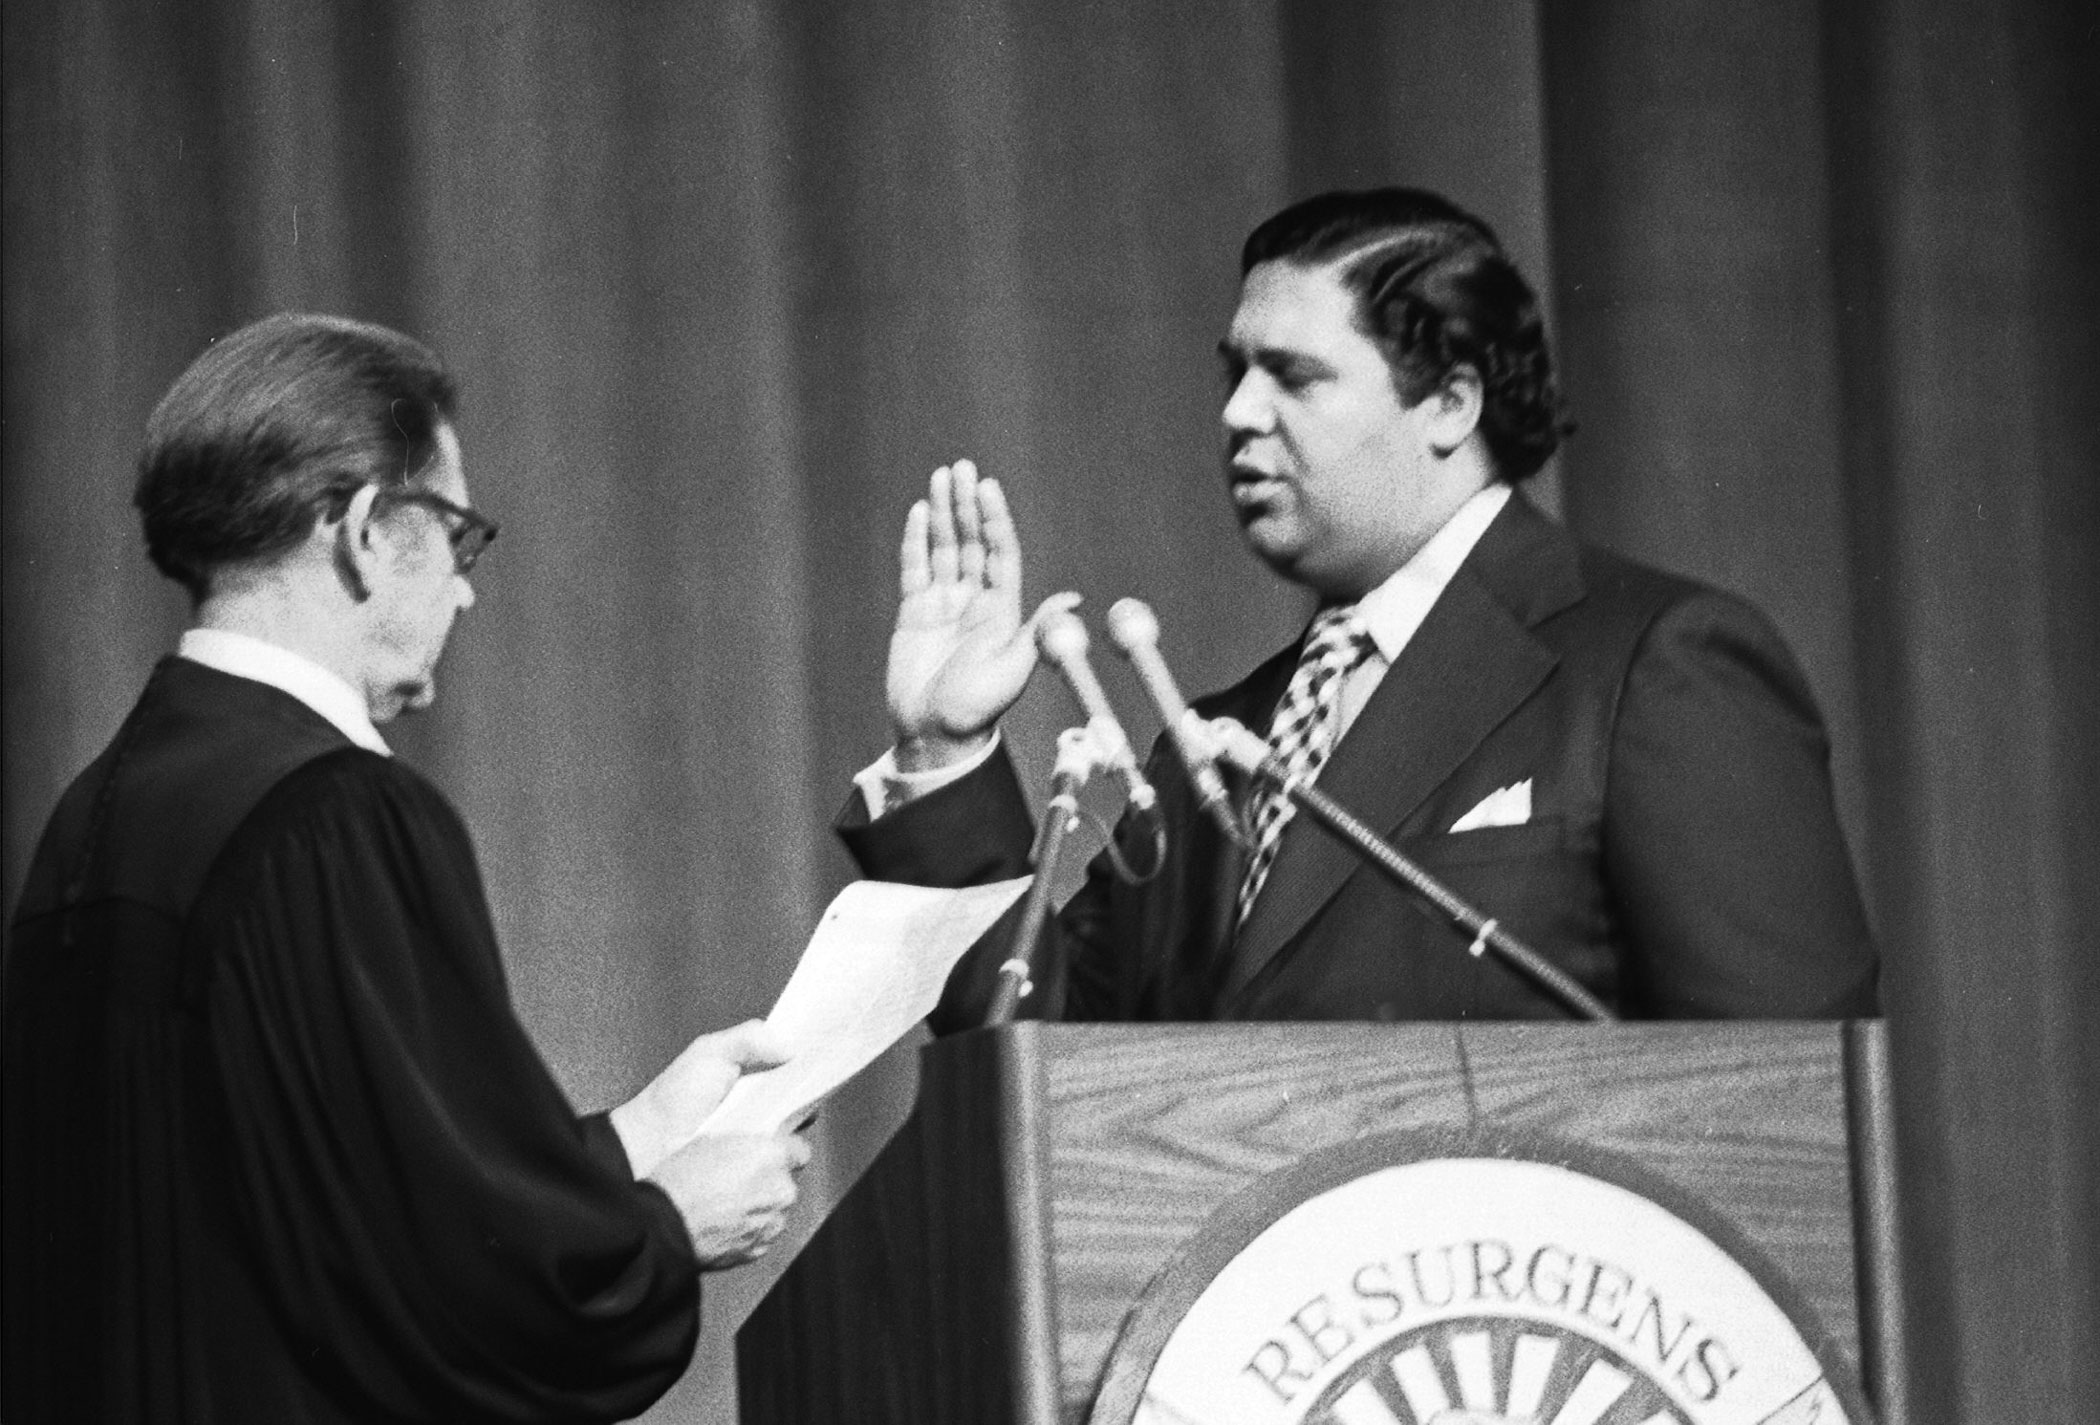 The swearing in of Maynard Jackson, Atlanta's first African American mayor